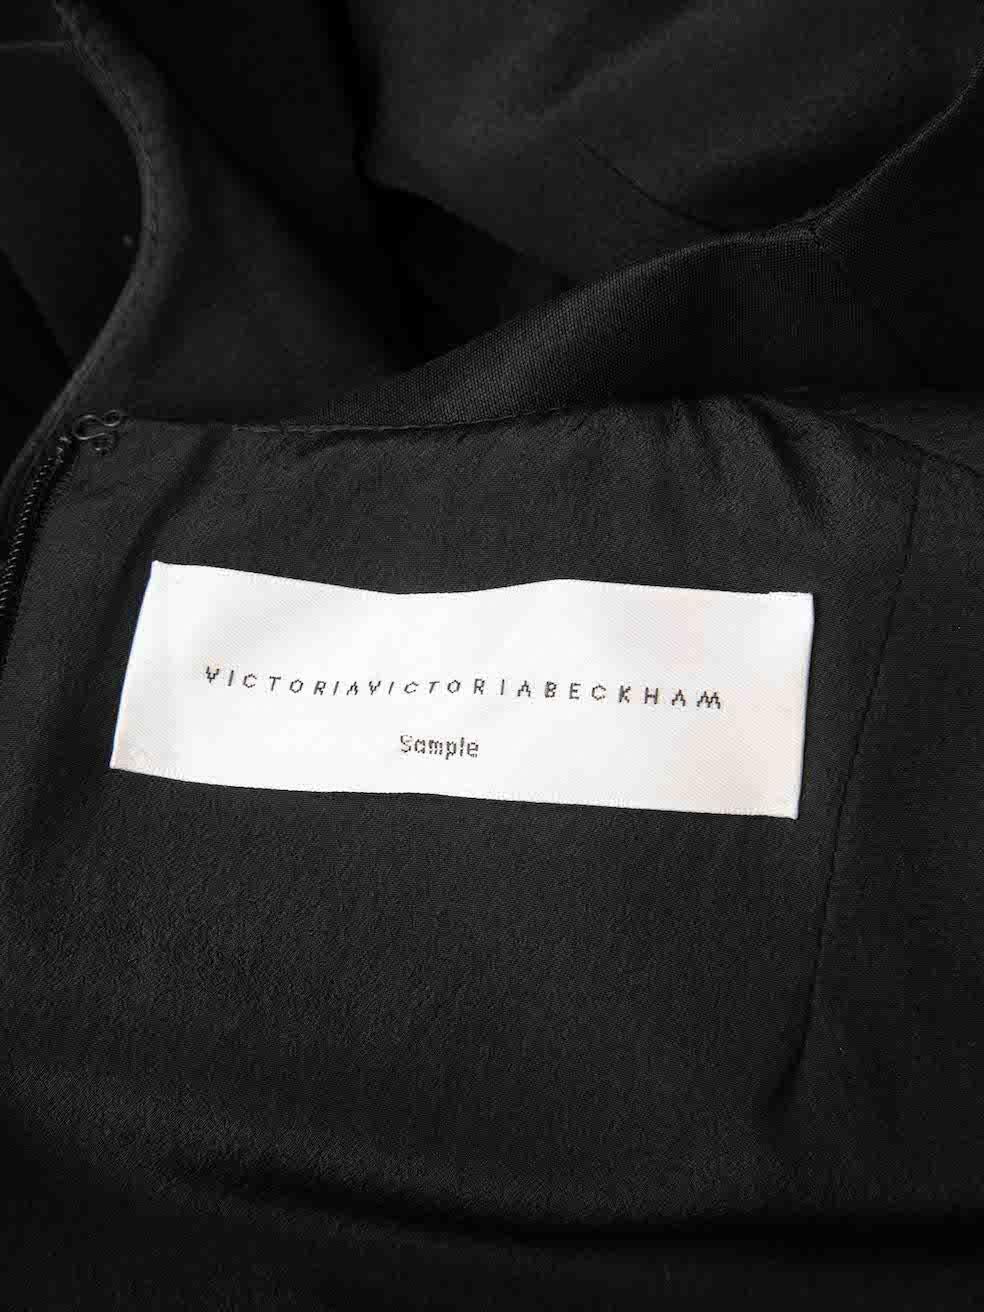 Victoria Beckham Black Ruffle Hem Shift Dress Size M For Sale 1